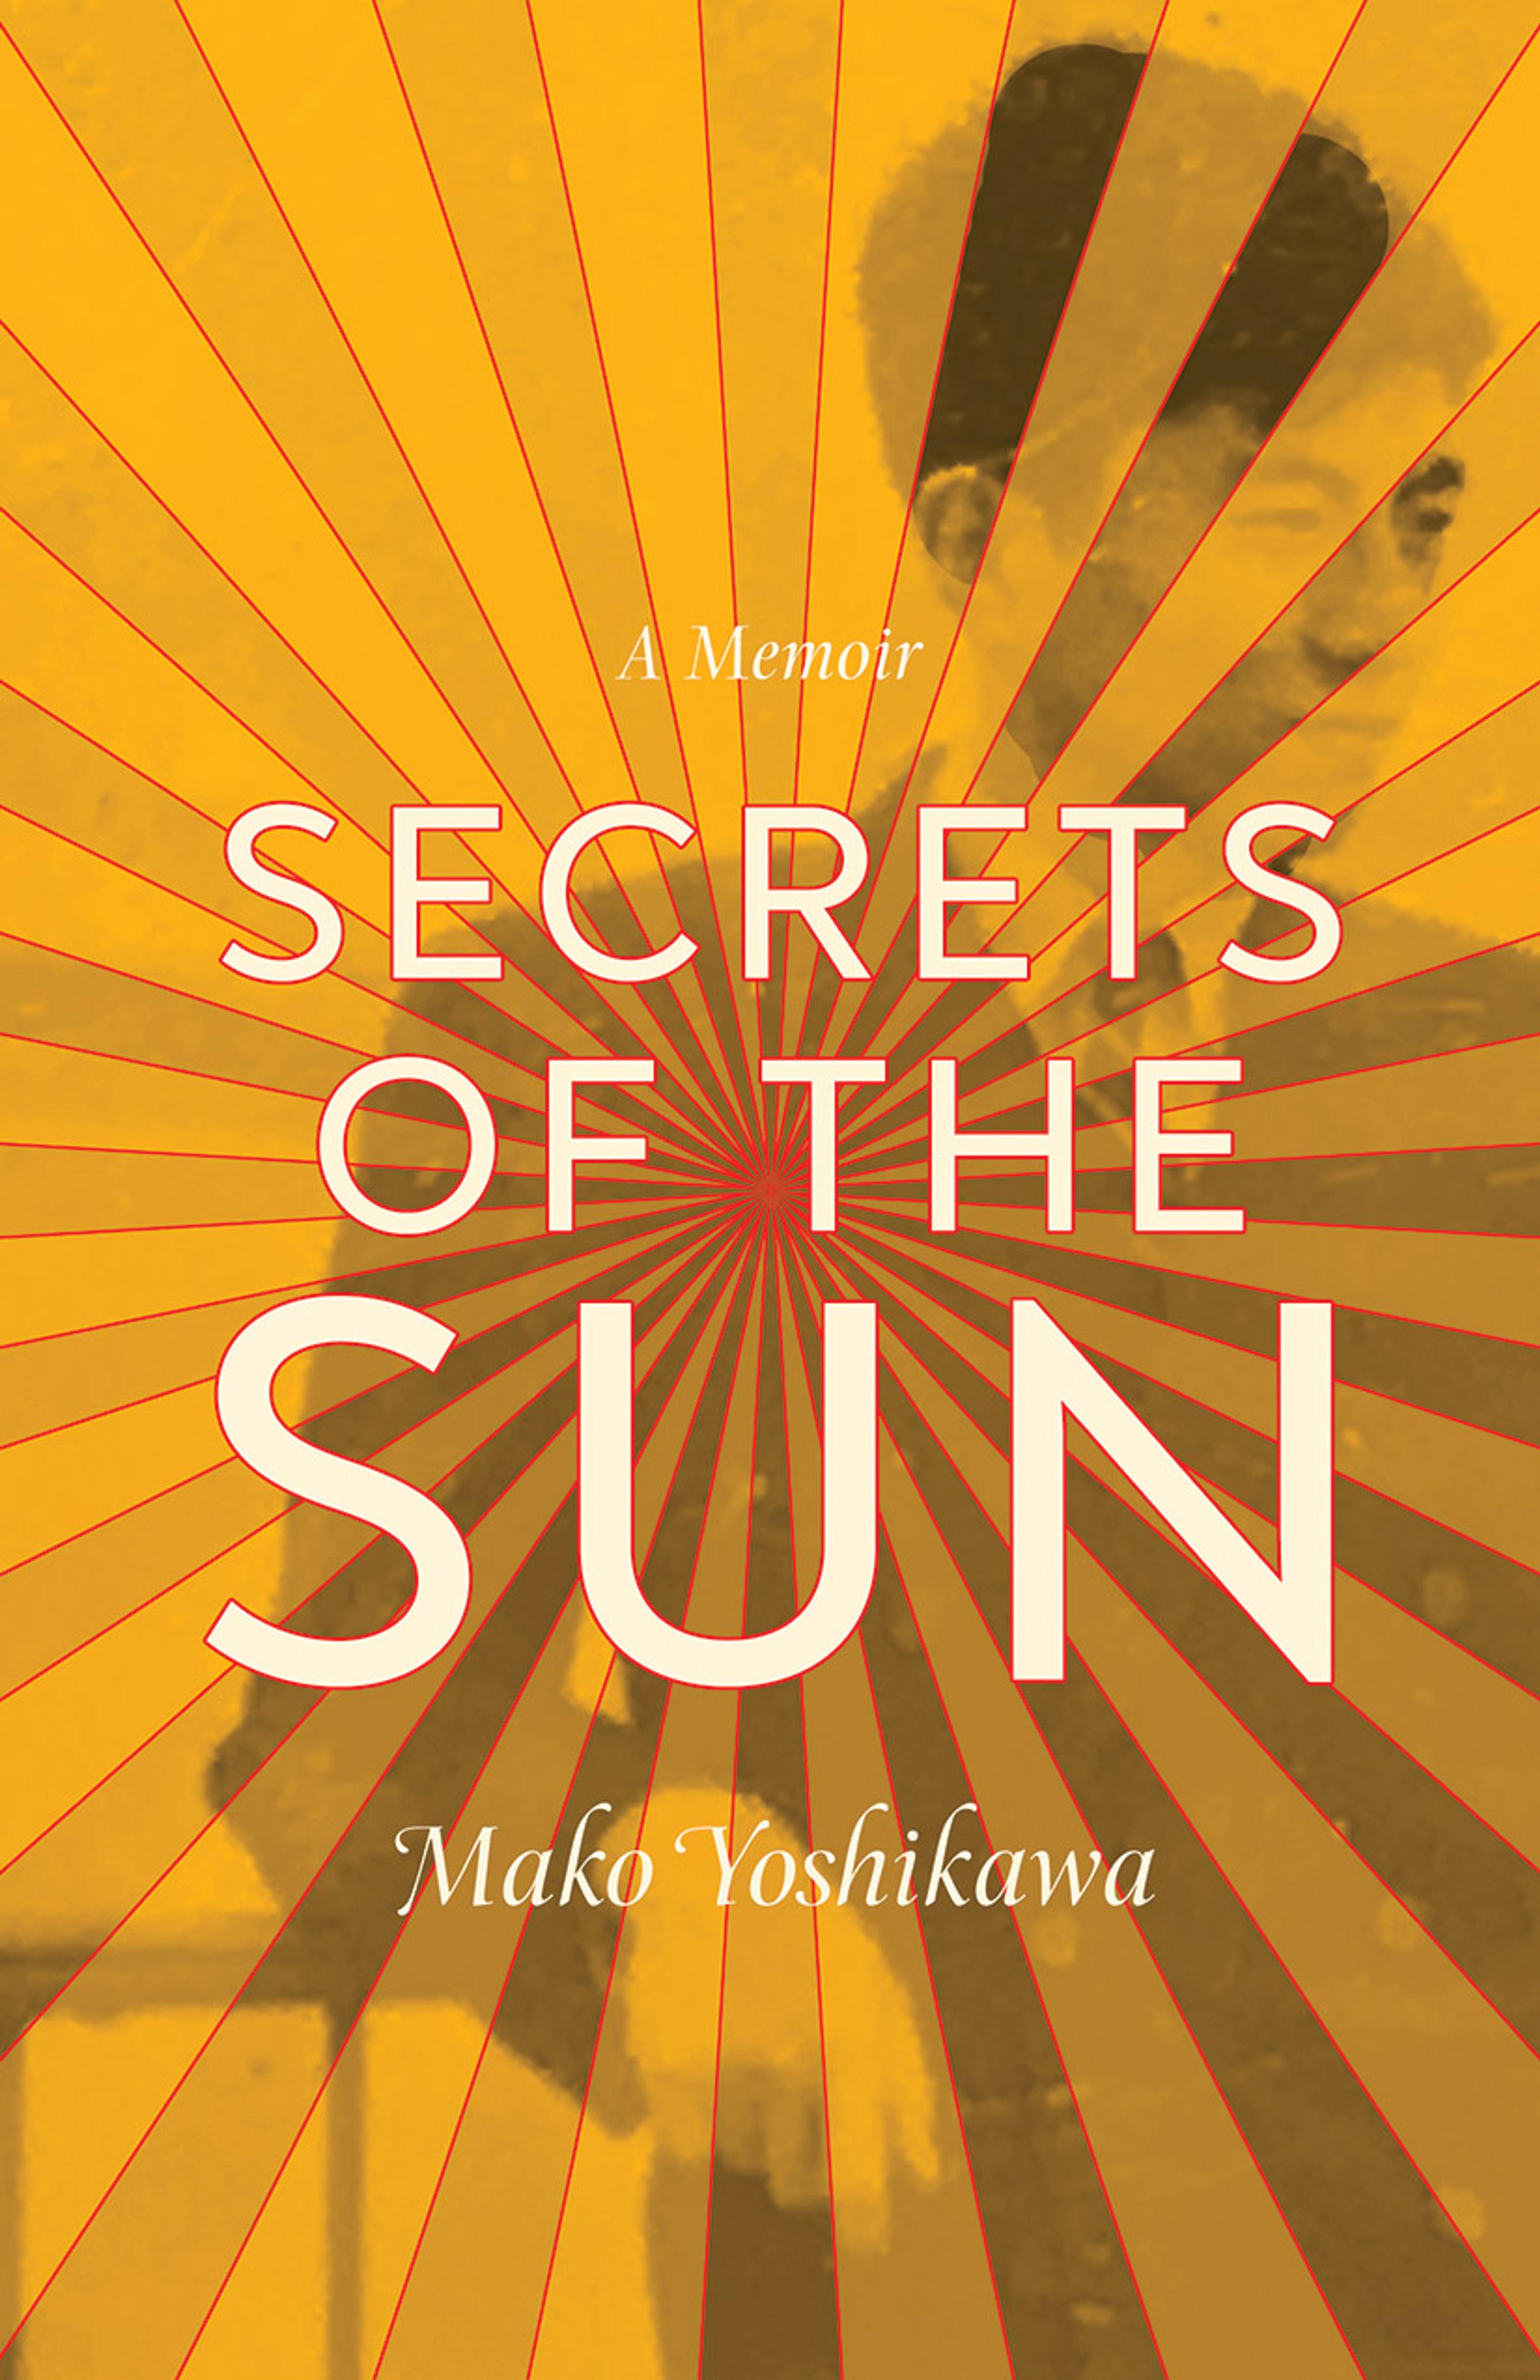 The Arc of Identity: A Conversation with Mako Yoshikawa